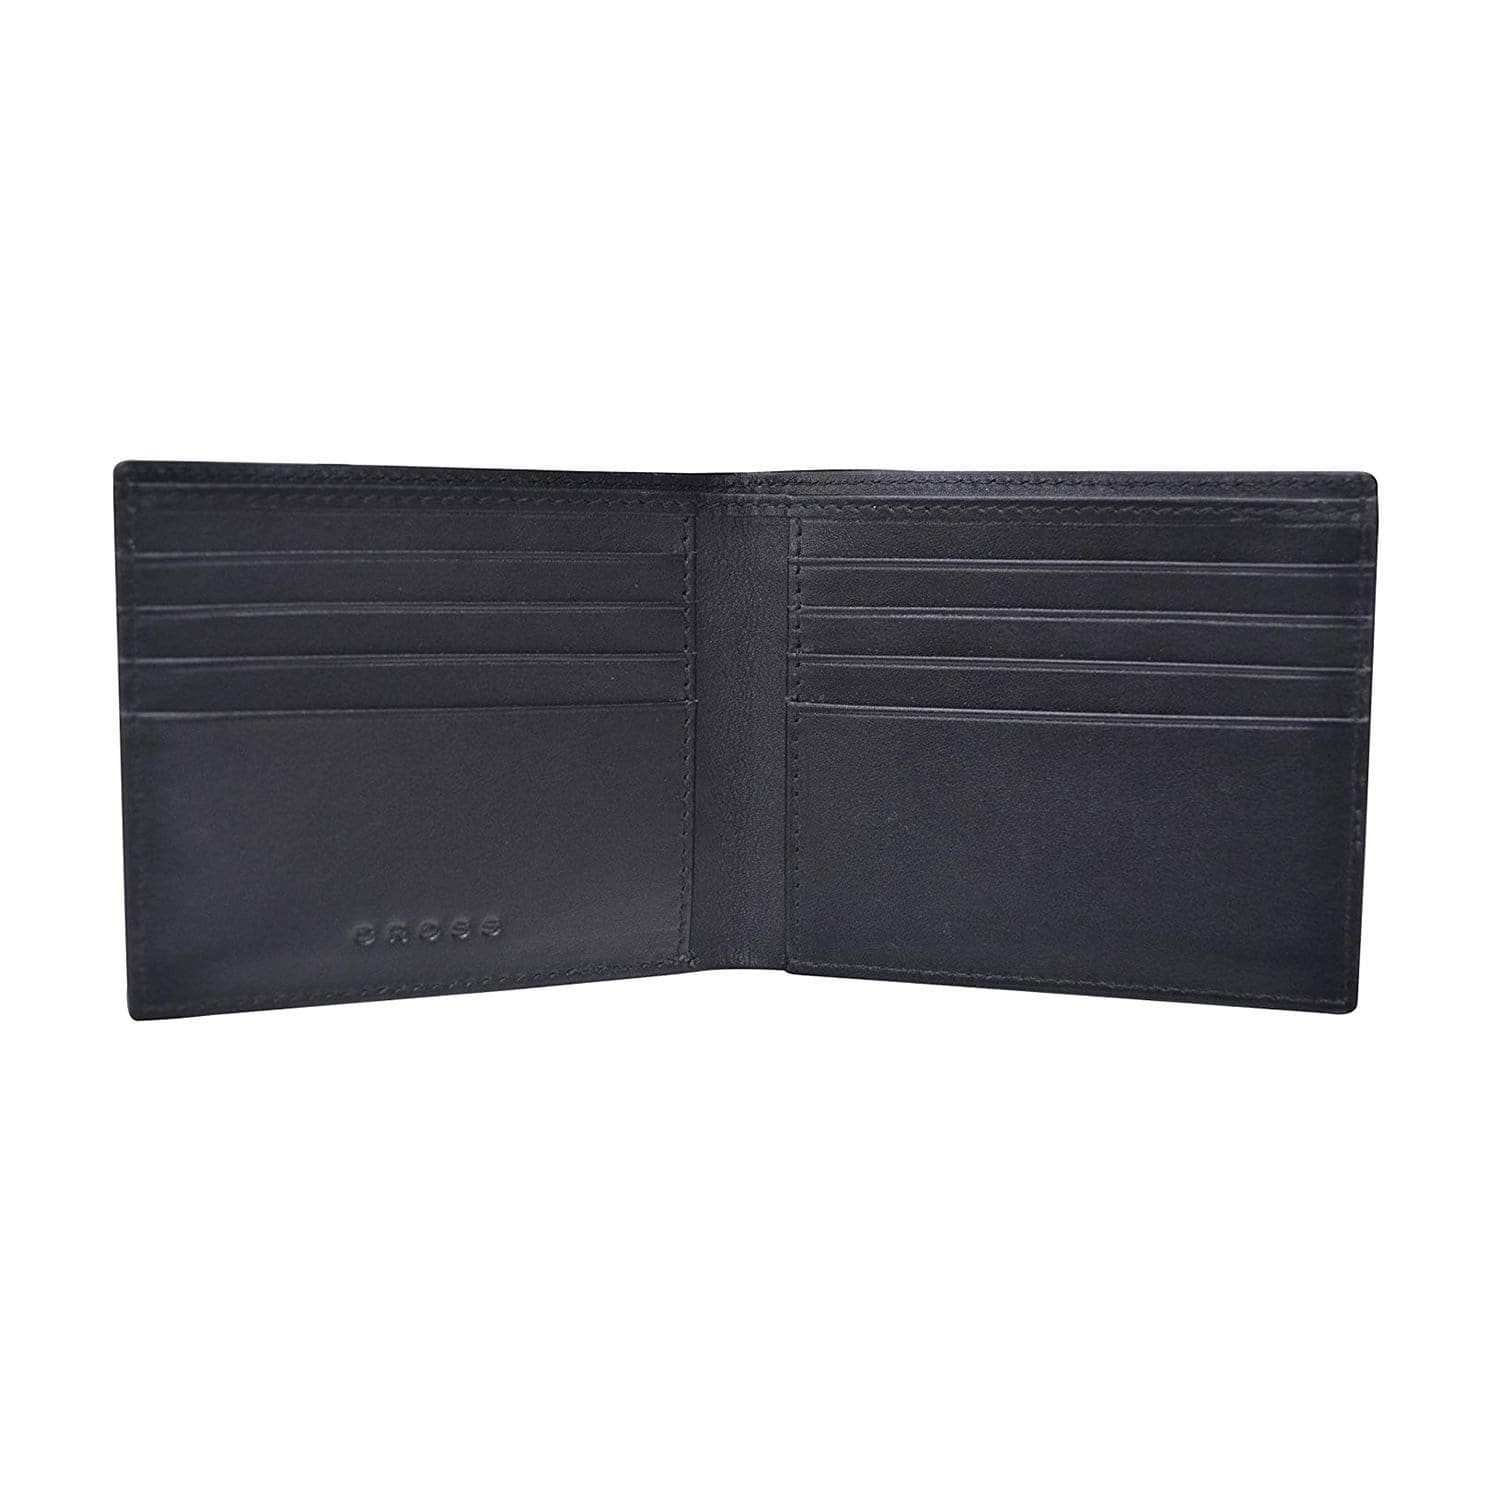 Cross Coco Signature Slim Leather Wallet for Men  - Black - AC268121-1-1 - Jashanmal Home